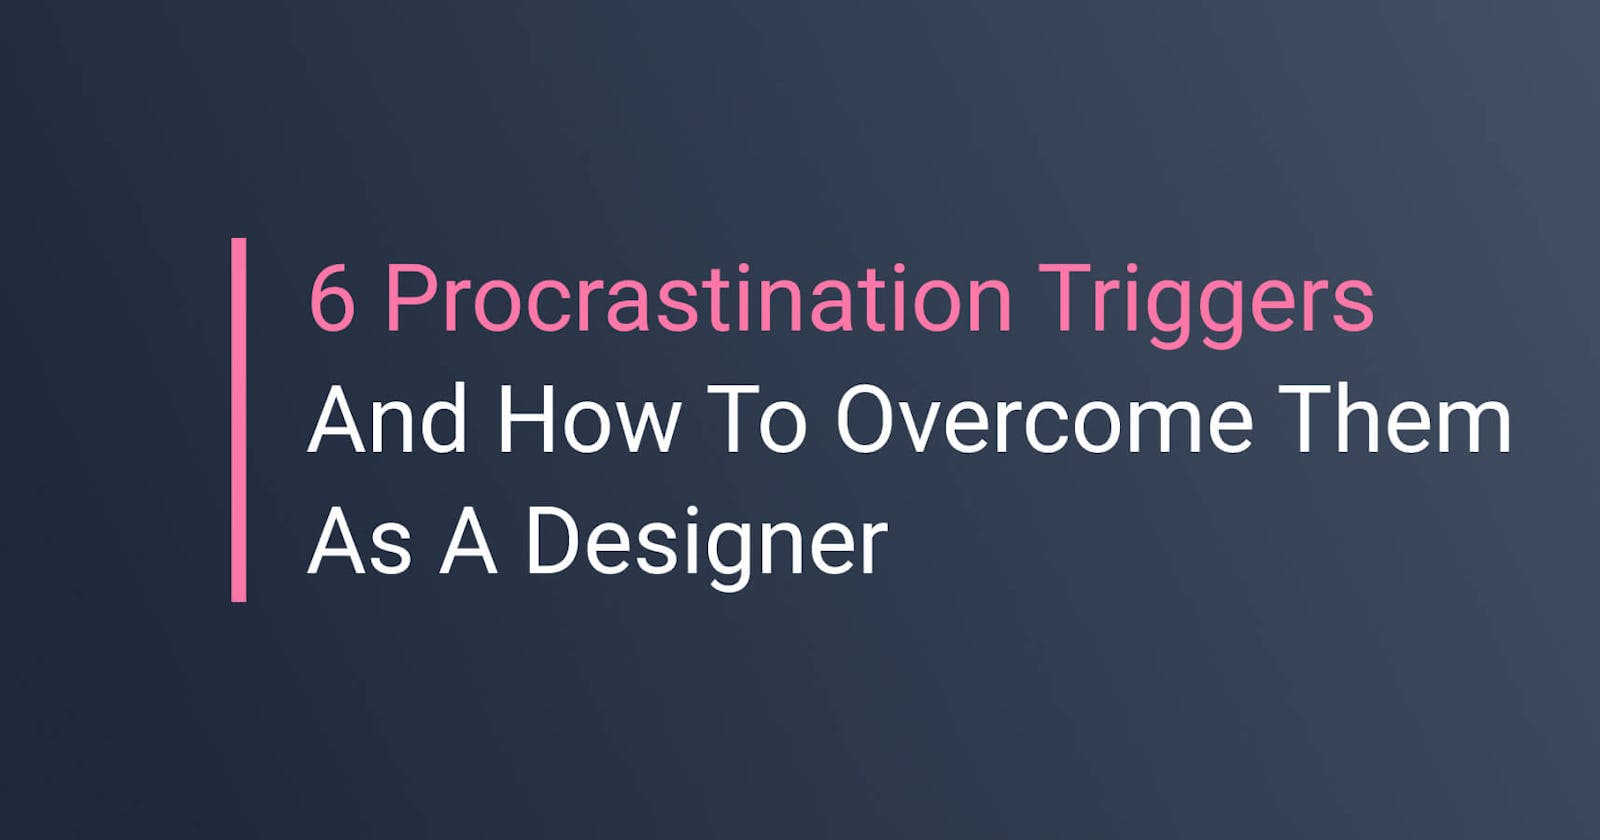 6 Procrastination Triggers And How To Overcome Them As A Designer